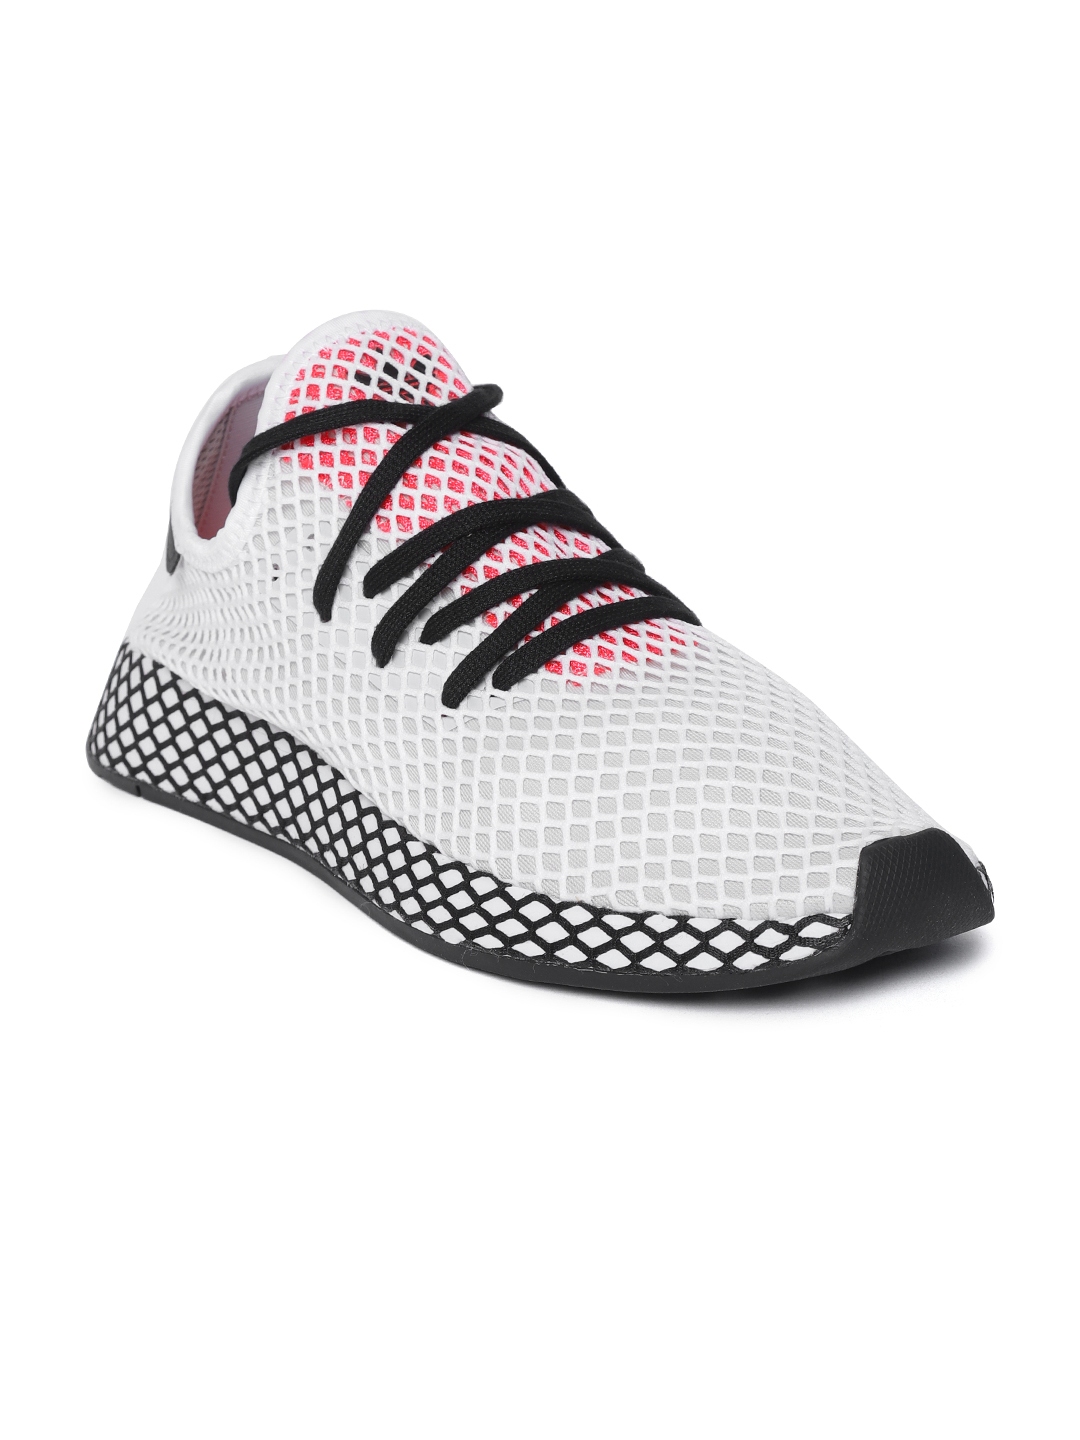 ADIDAS Originals Men White Runner - Casual Shoes for 8616799 | Myntra